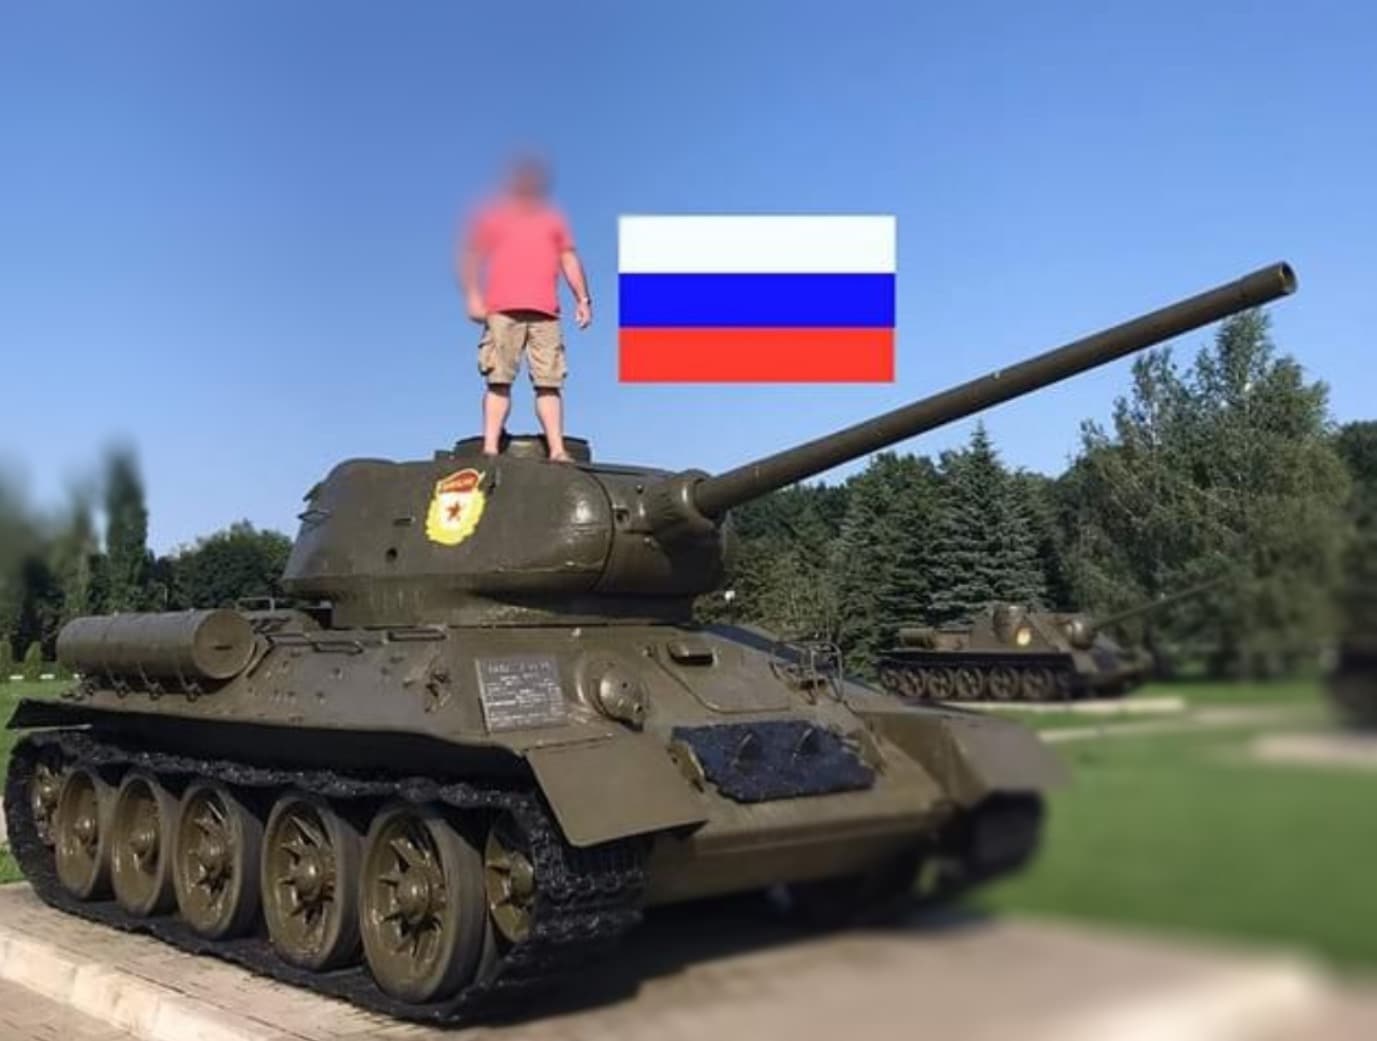 Currentzis tenor poses triumphant pic on a Putin tank